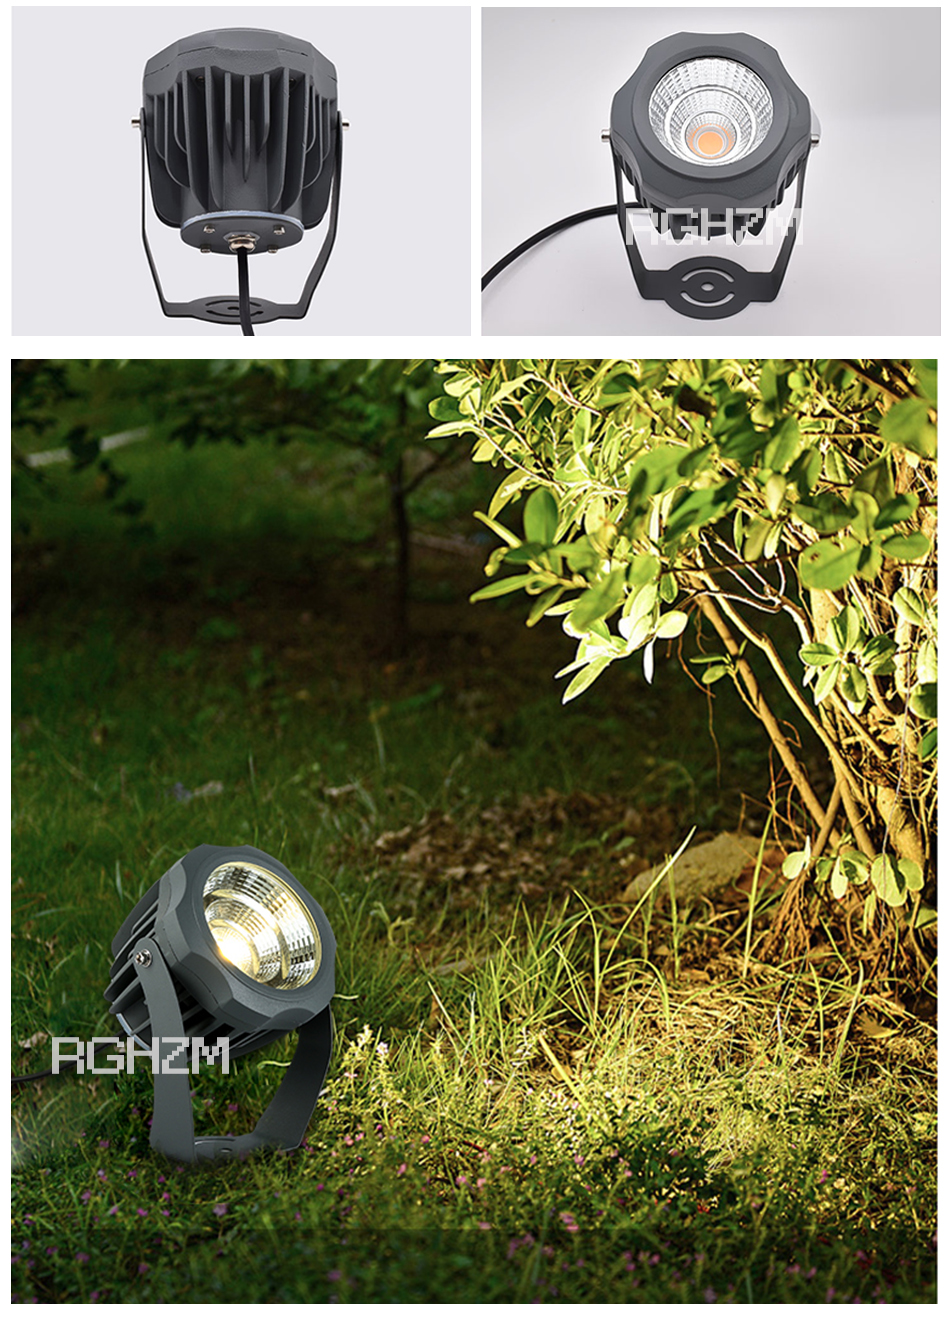 Led IP65 Waterproof Flood Light 12W 20W 25W 220V Outdoor Landscape Courtyard Lawn Garden Lighting Advertising Signs Spotlight